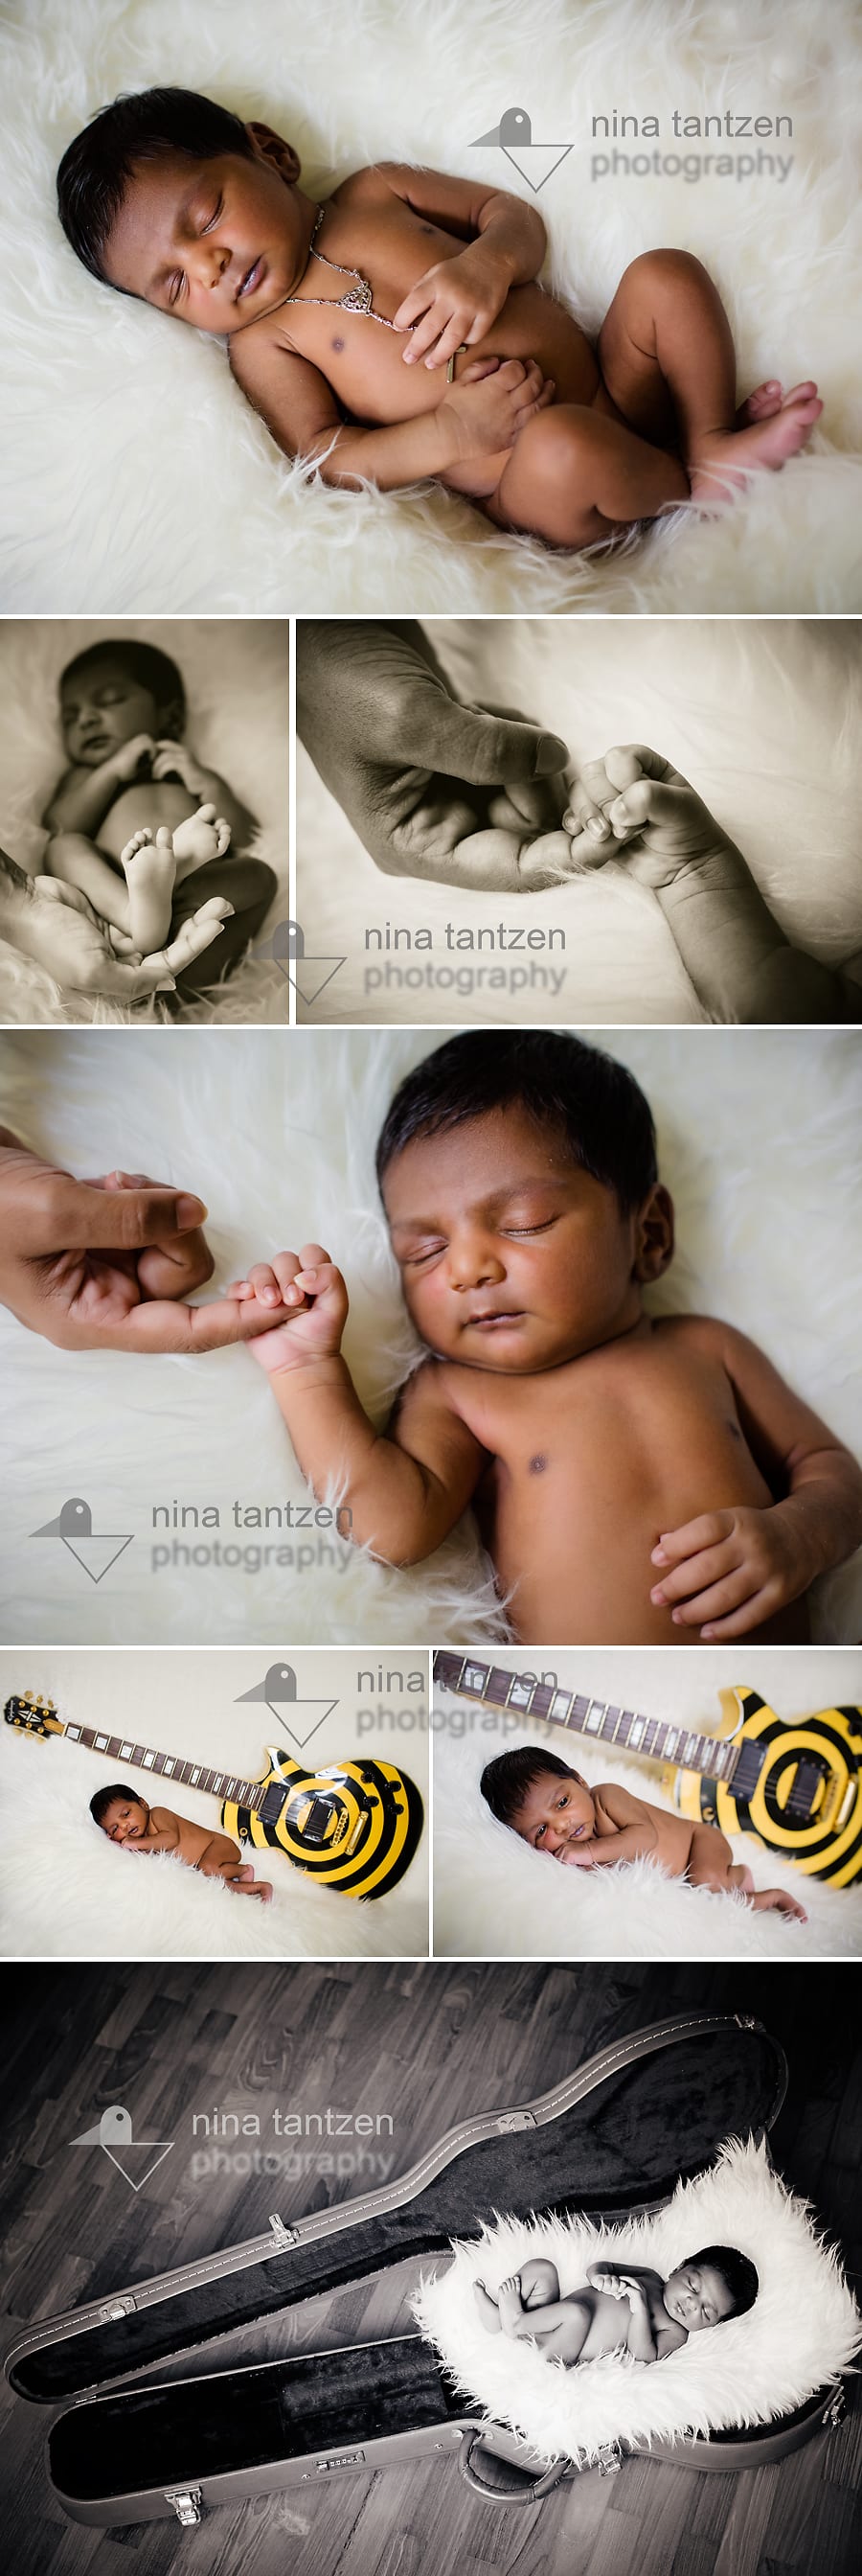 nina tantzen singapore newborn photographer